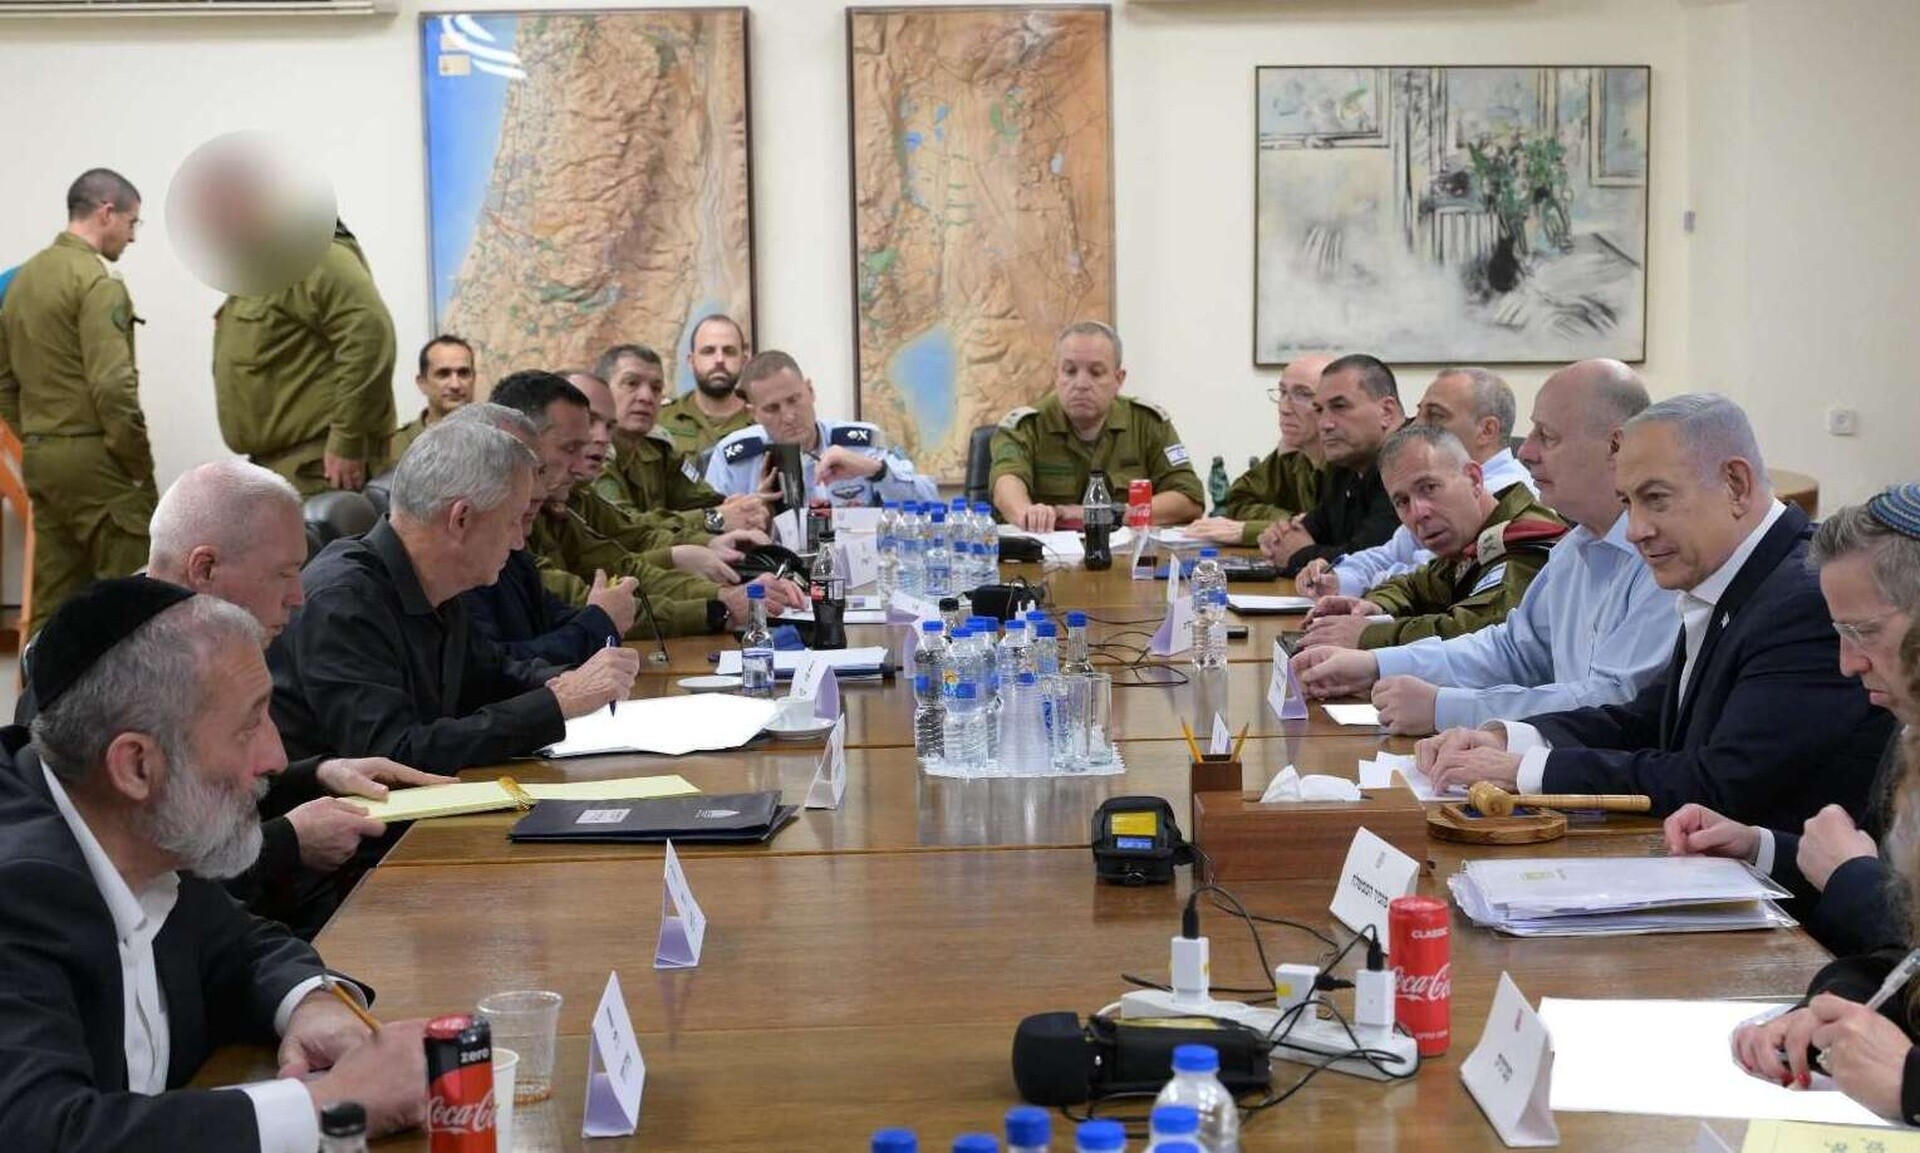 LIVE BLOG: «Όλα τα ενδεχόμενα είναι ανοιχτά» - Θρίλερ στο πολεμικό συμβούλιο του Ισραήλ